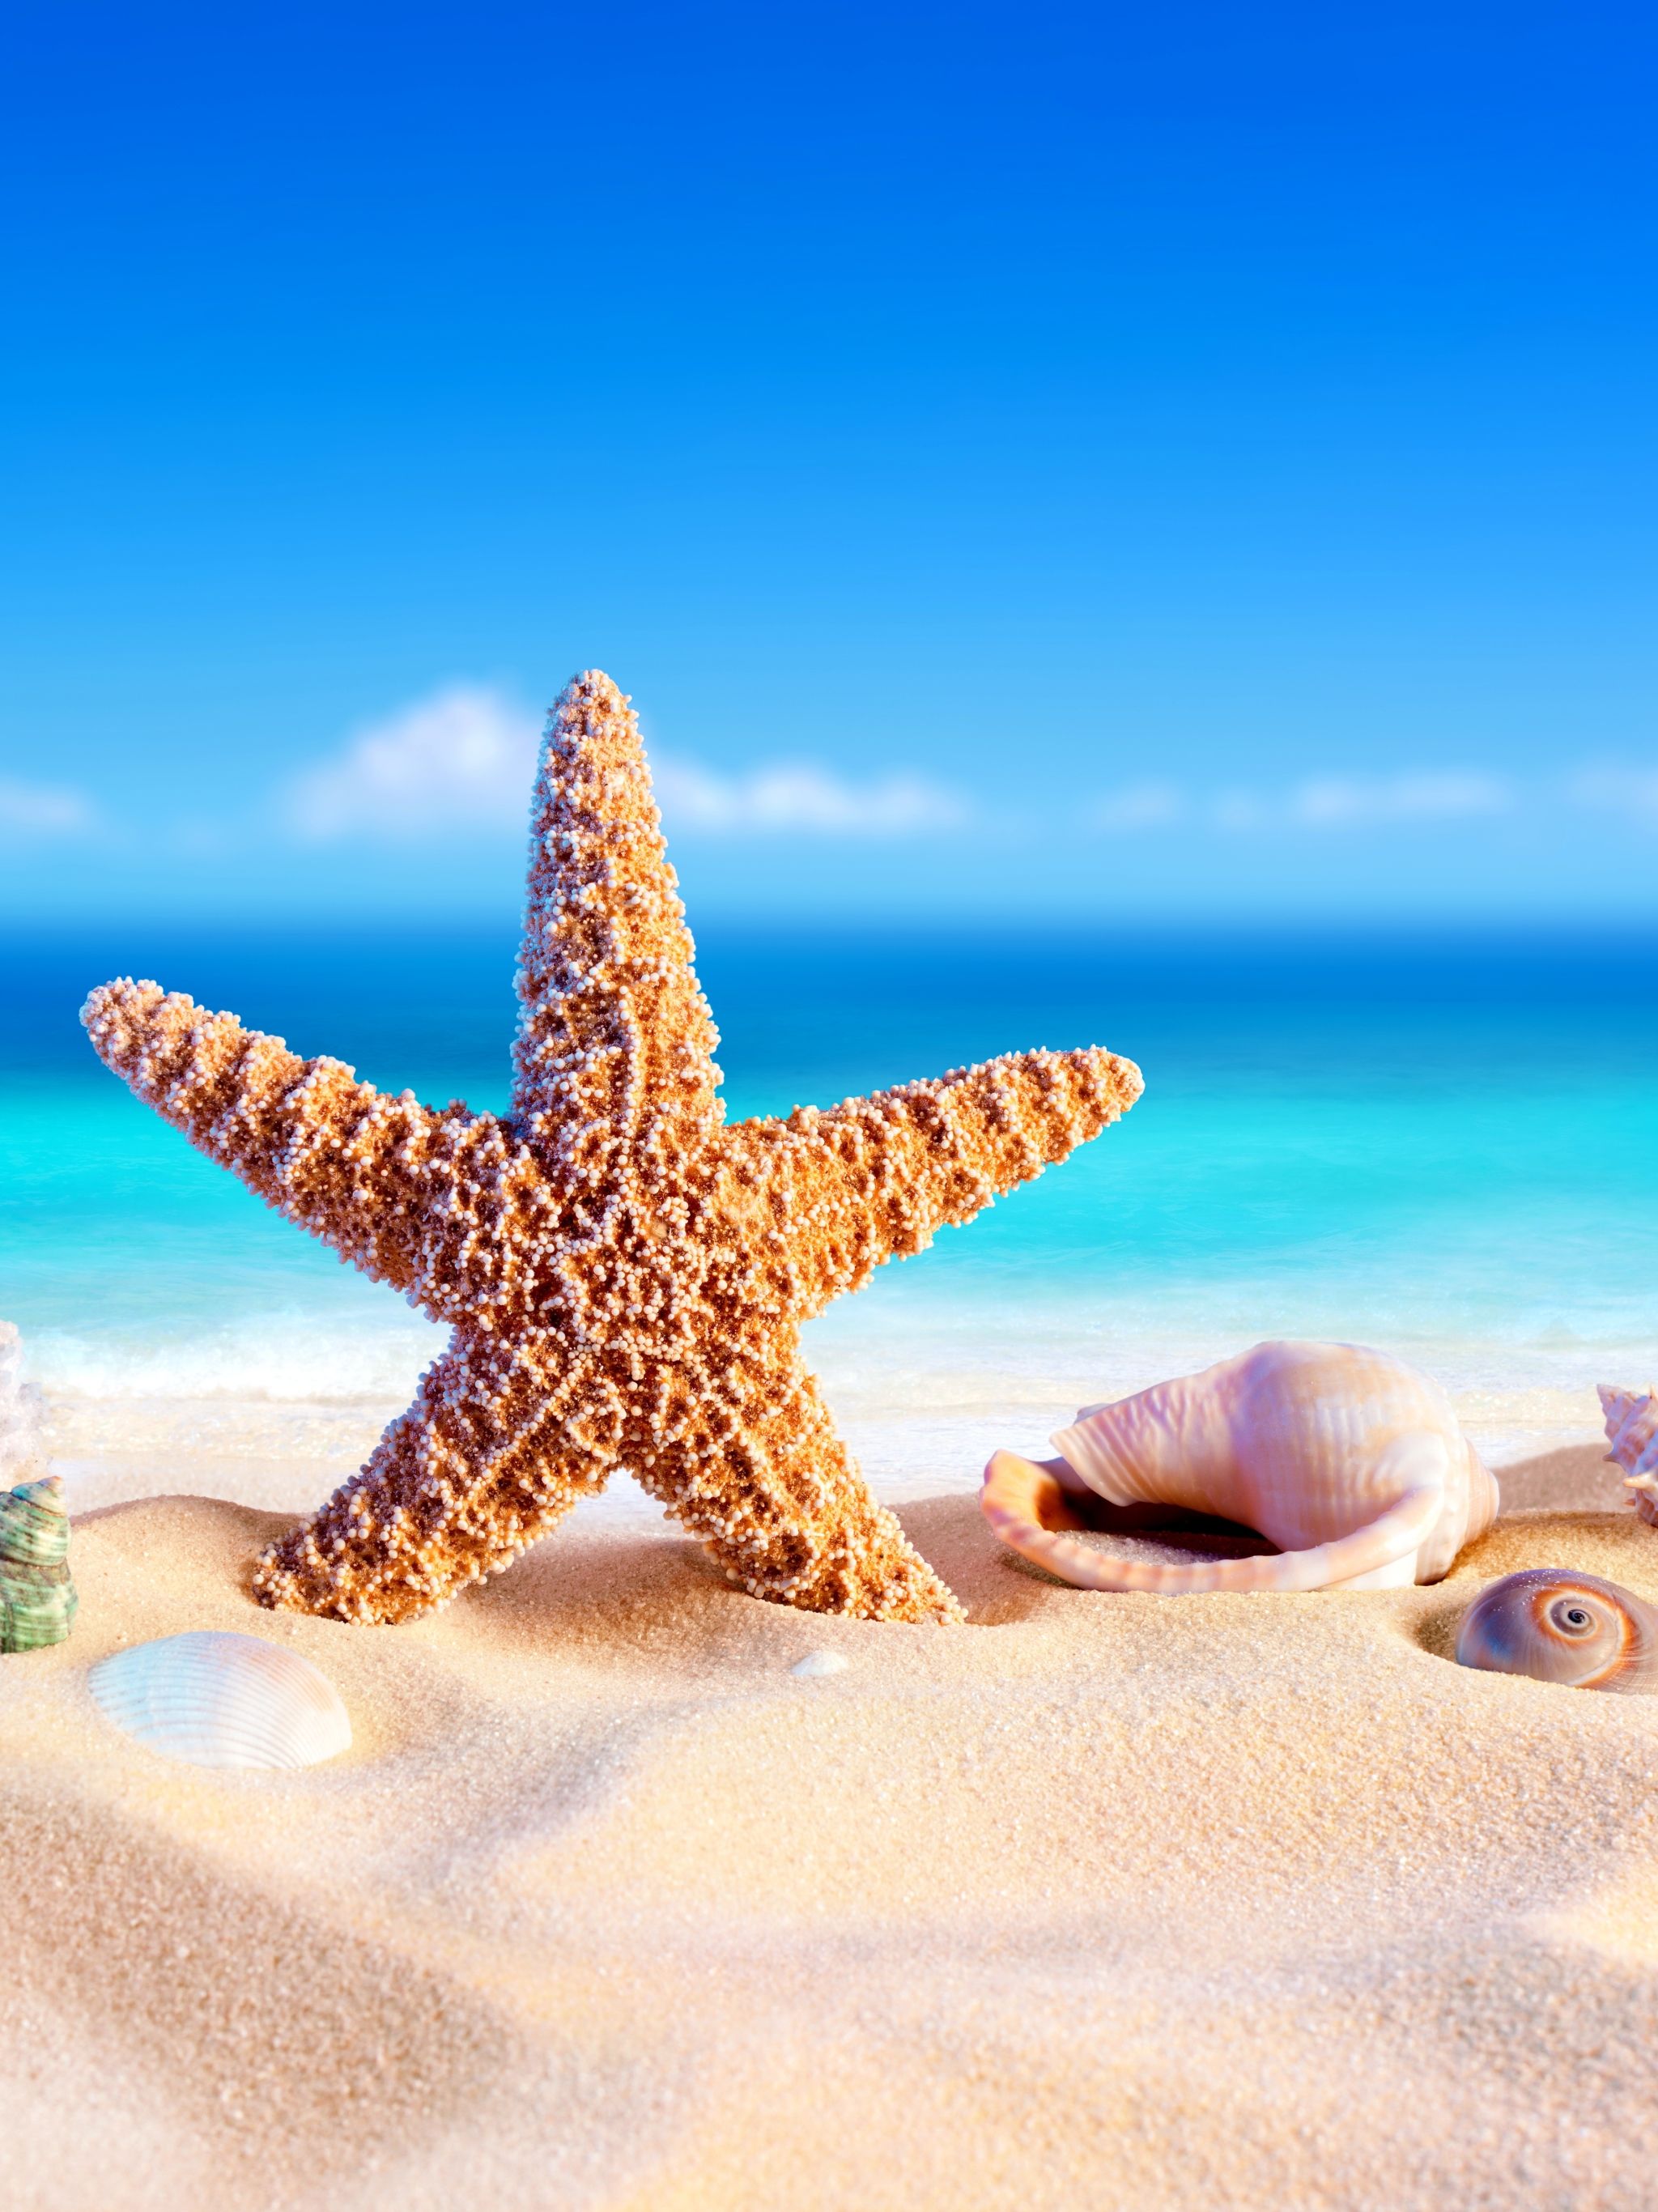 A starfish on the beach with shells - Starfish